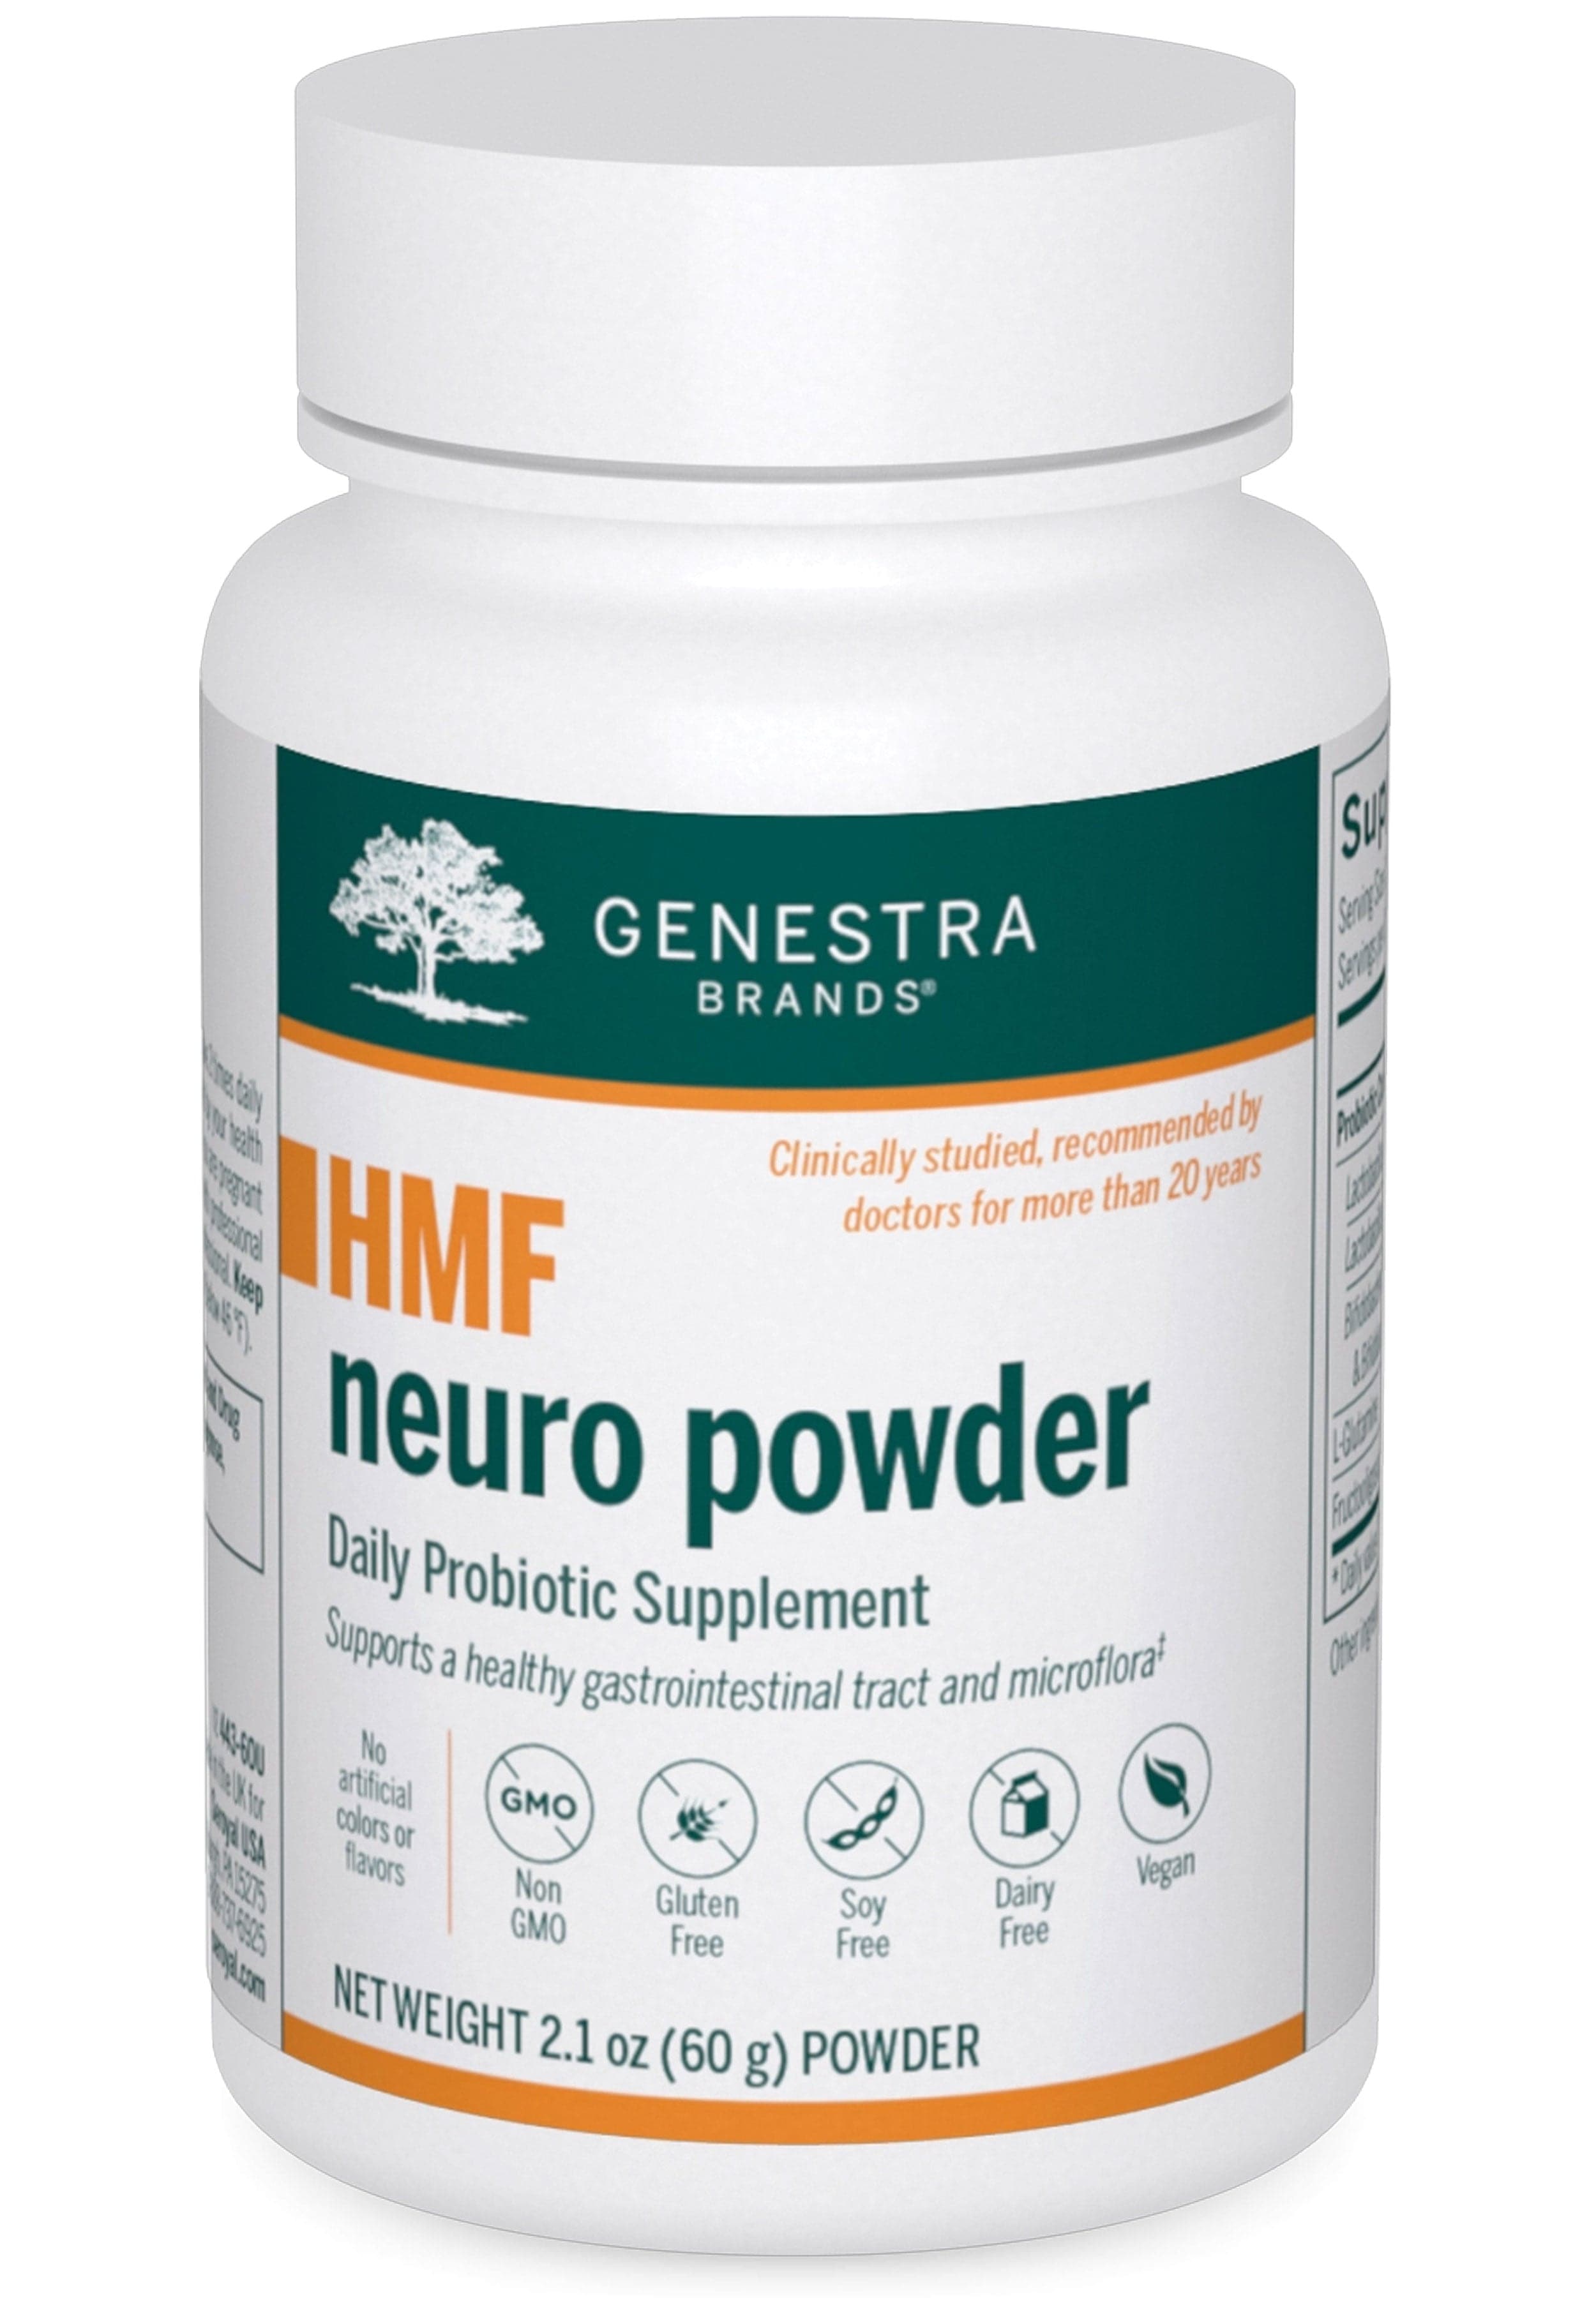 Genestra Brands HMF Neuro Powder